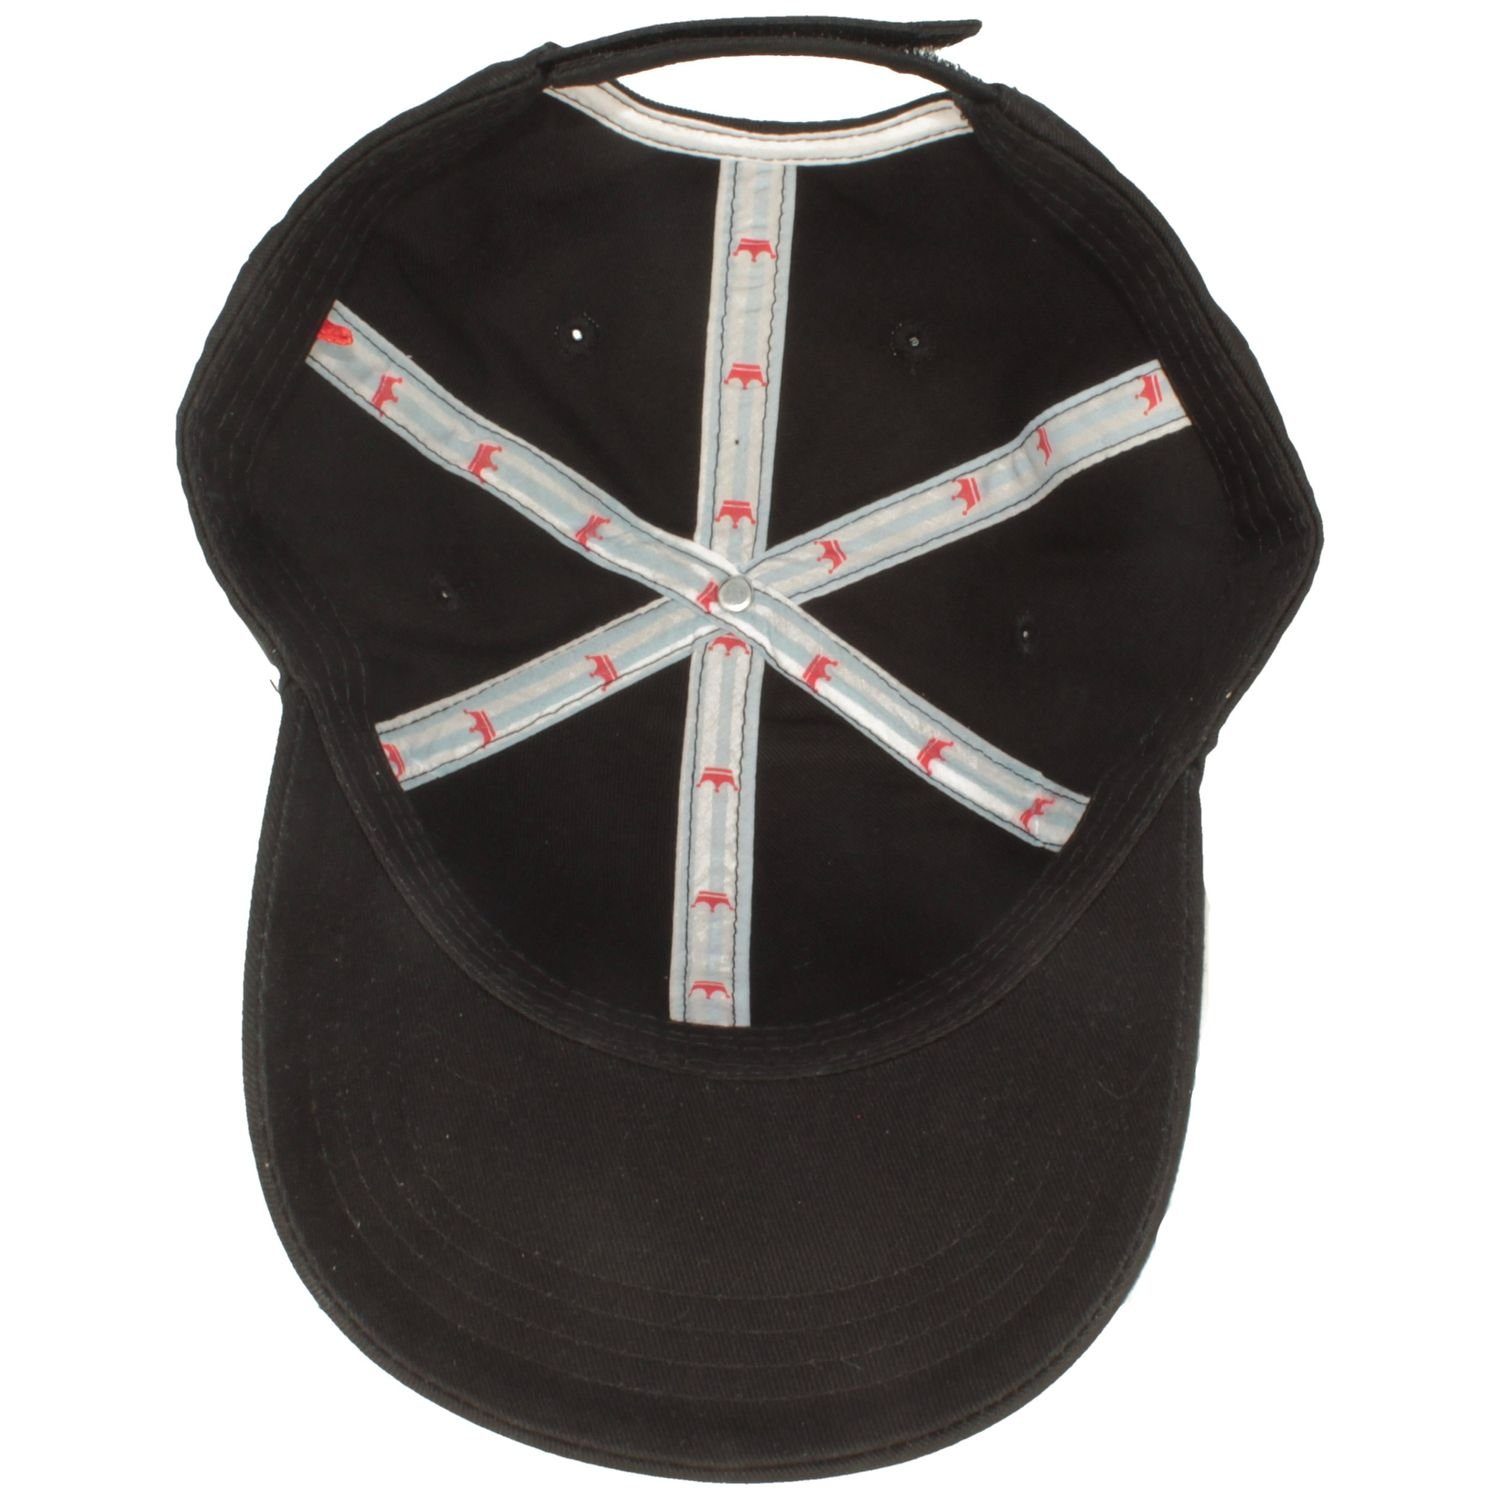 Balke Baseball Cap Baumwoll-Baseball-Cap schwarz Einfarbige 500